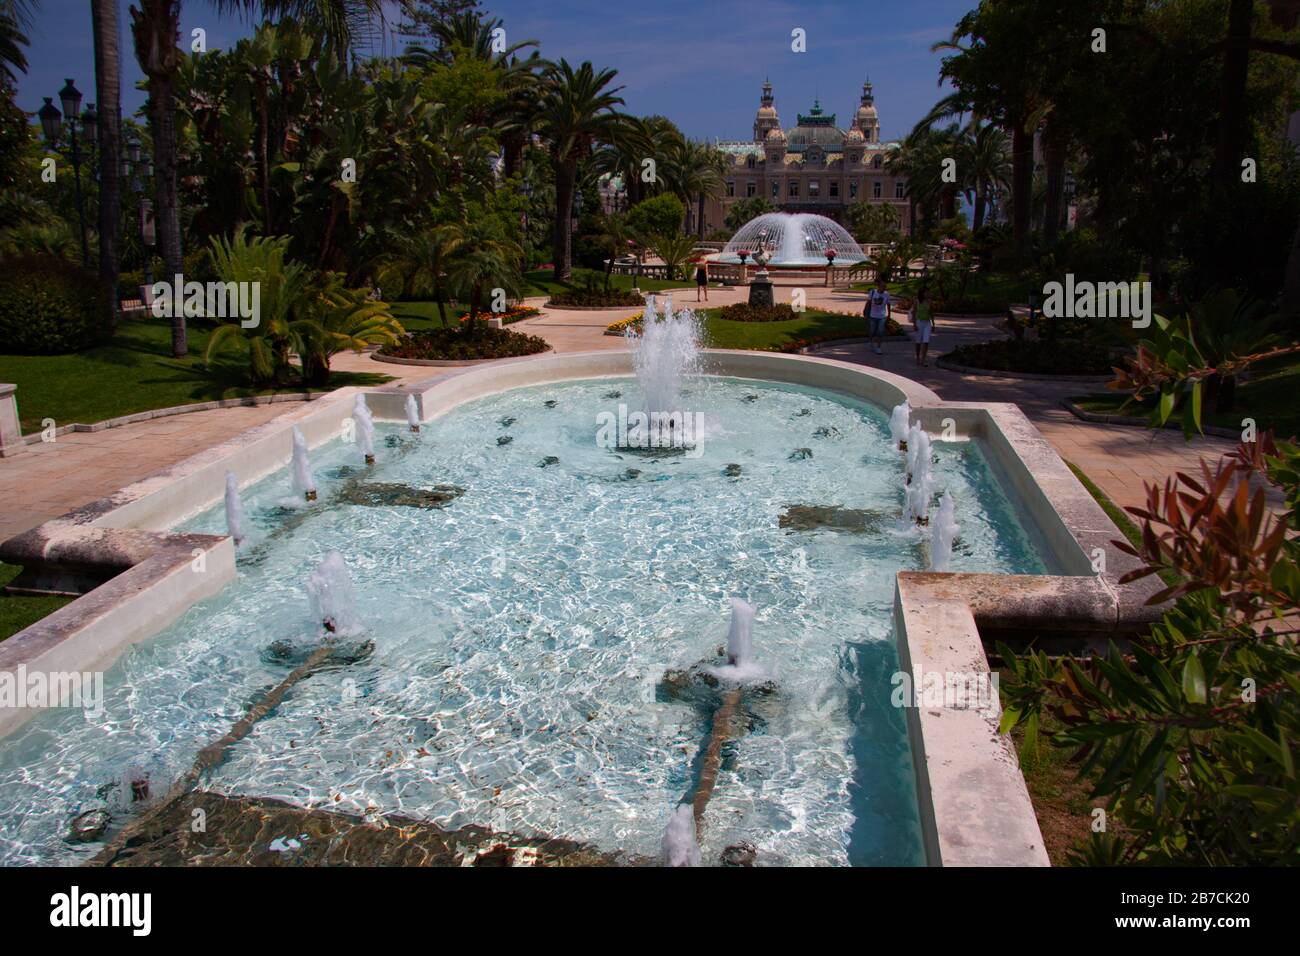 Plaza del Casino de Monte Carlo con escultura del espejo de Anish Kapoor Foto de stock